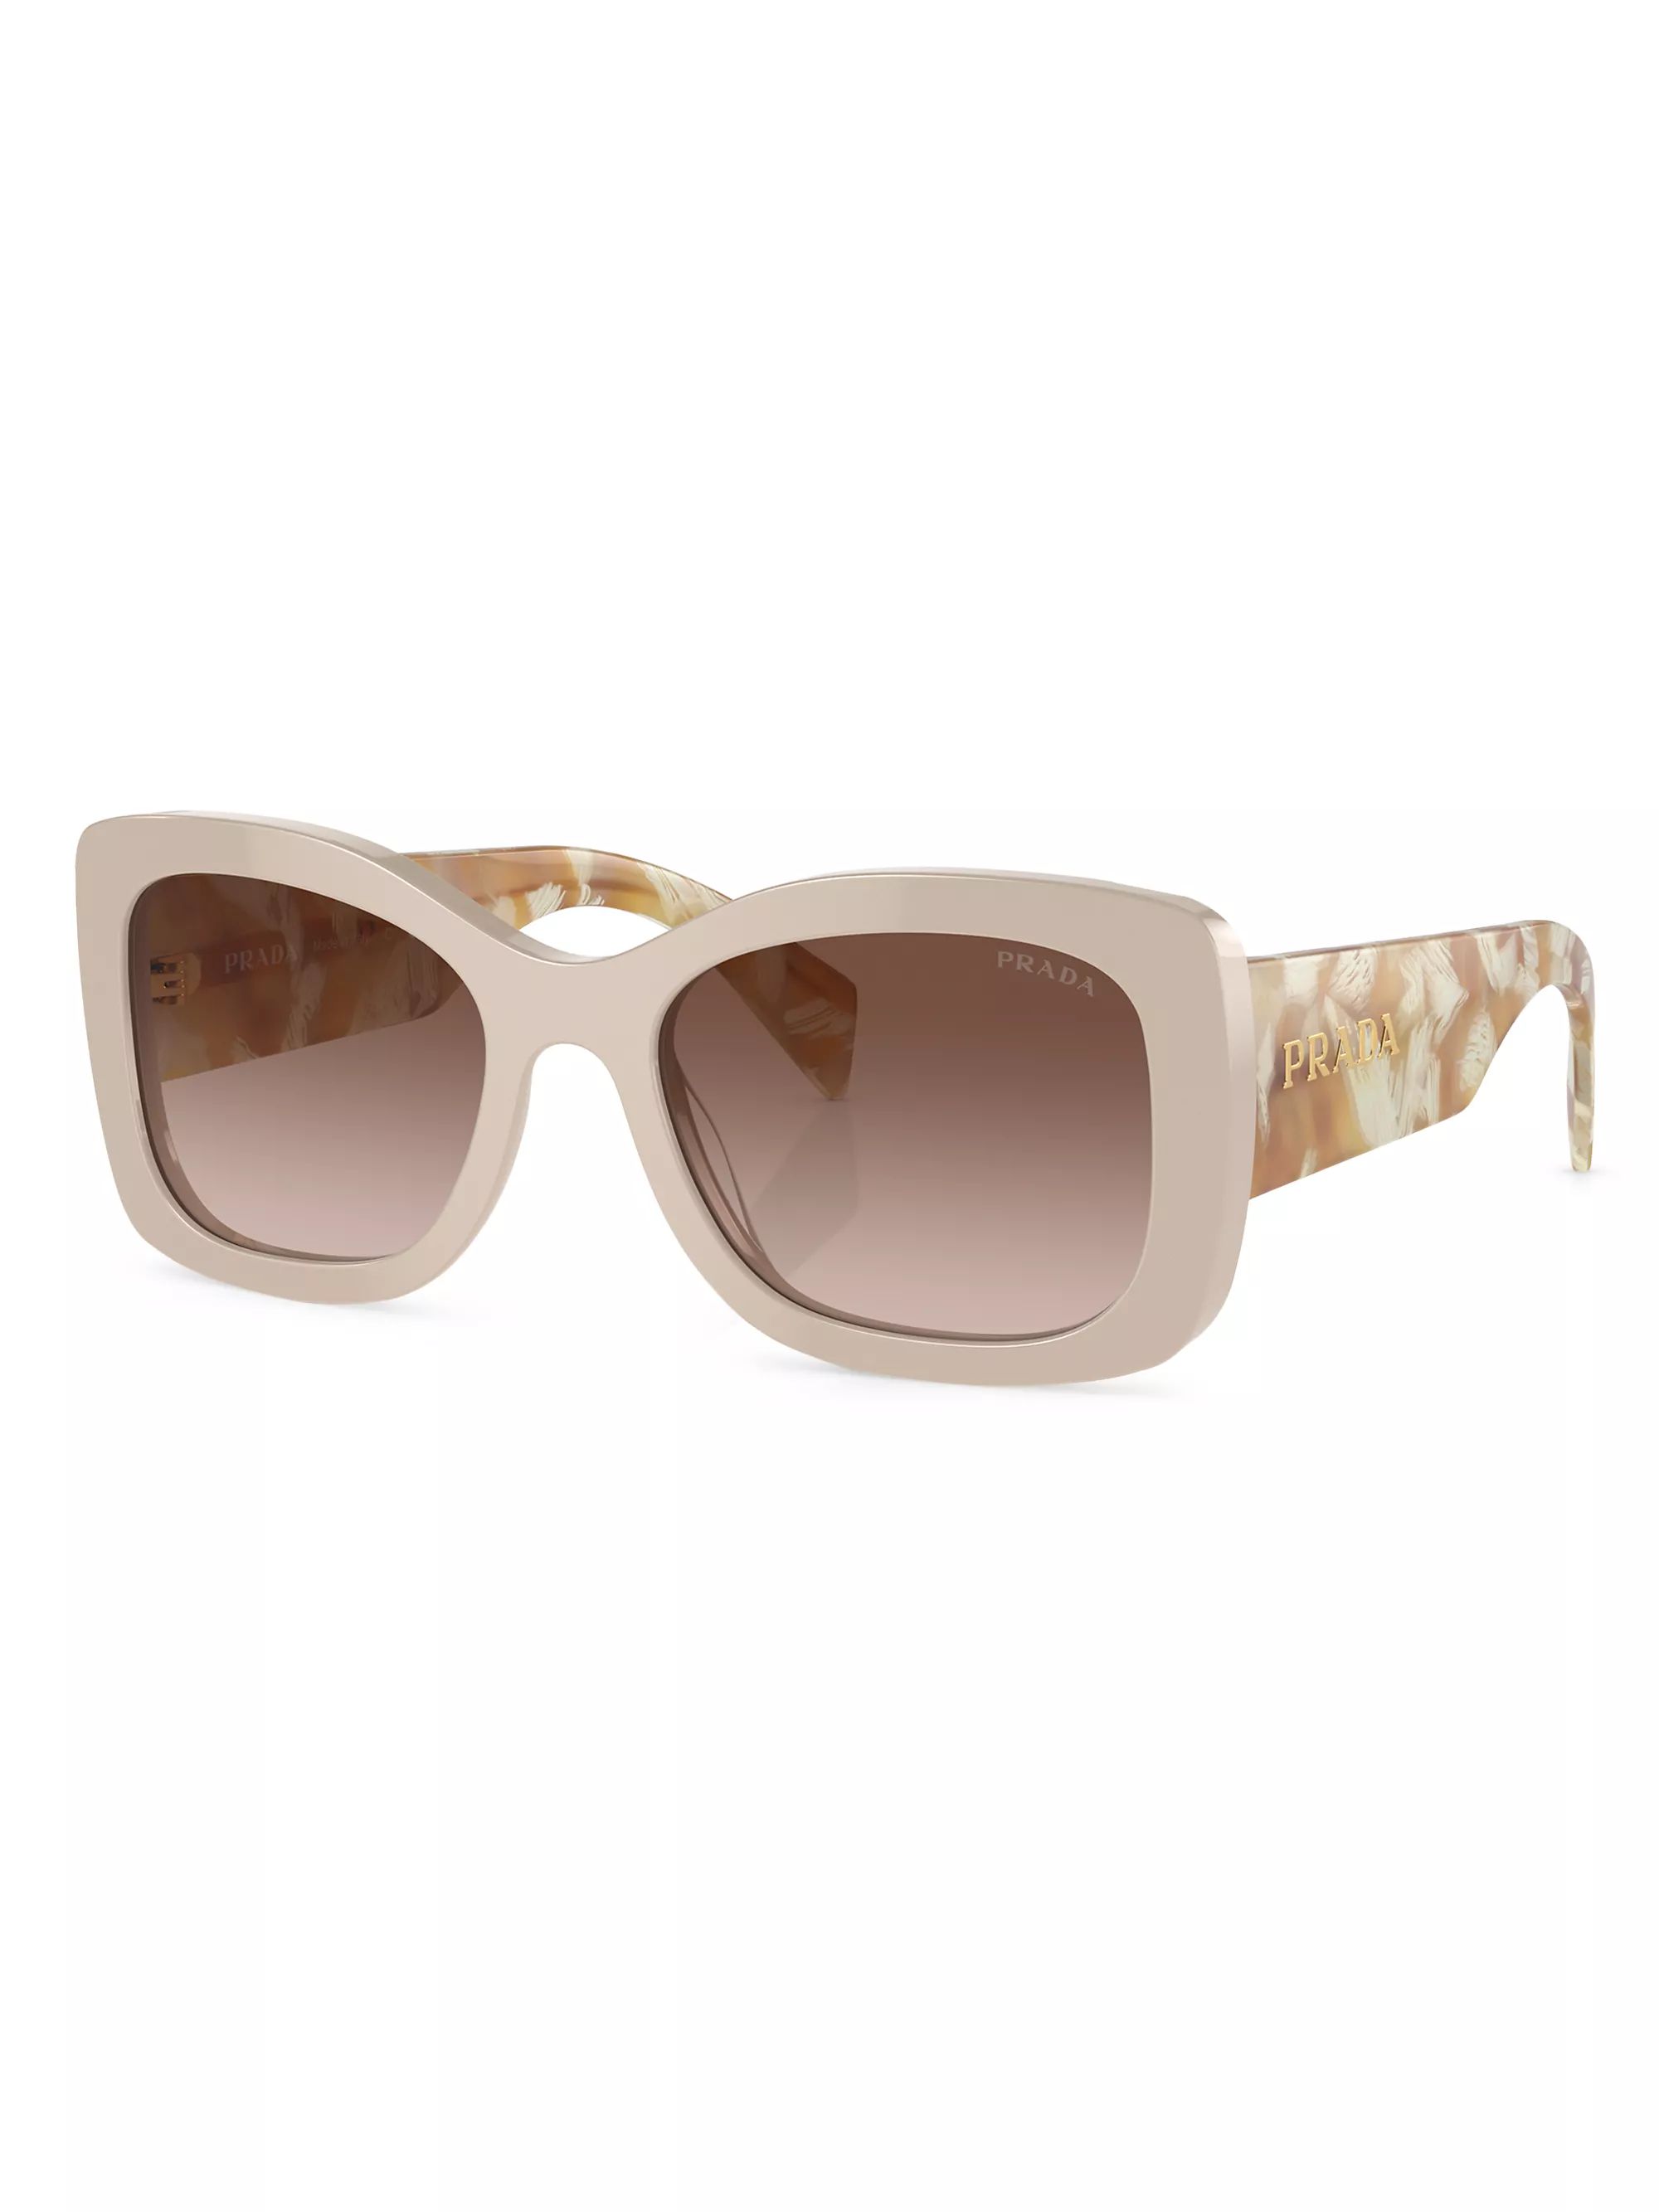 Shop Prada PR A08S 56MM Rectangular Sunglasses | Saks Fifth Avenue | Saks Fifth Avenue